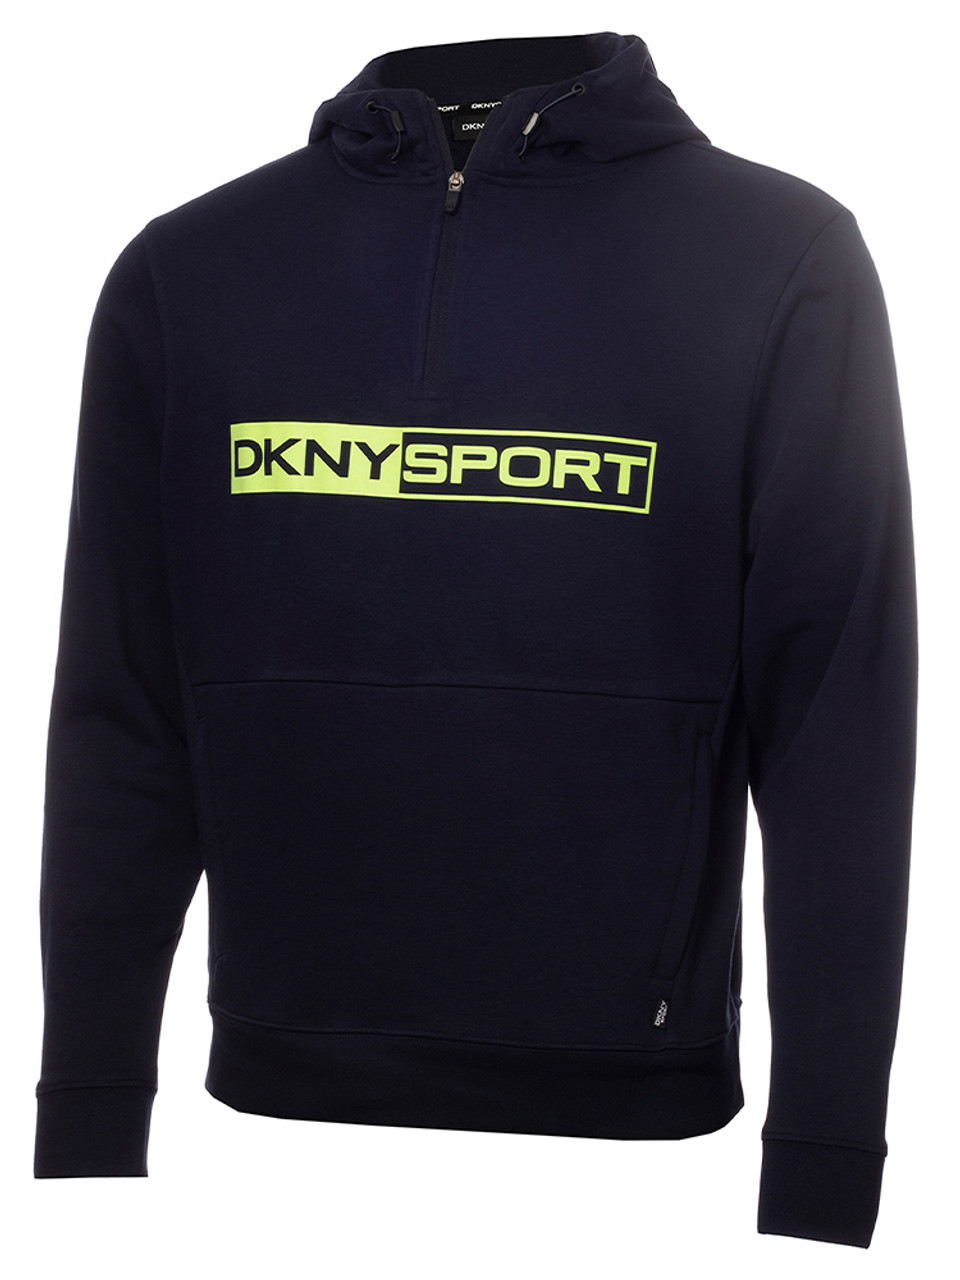 DKNY Sport Bergen Beach 1/4 Zip Hoodie - Navy